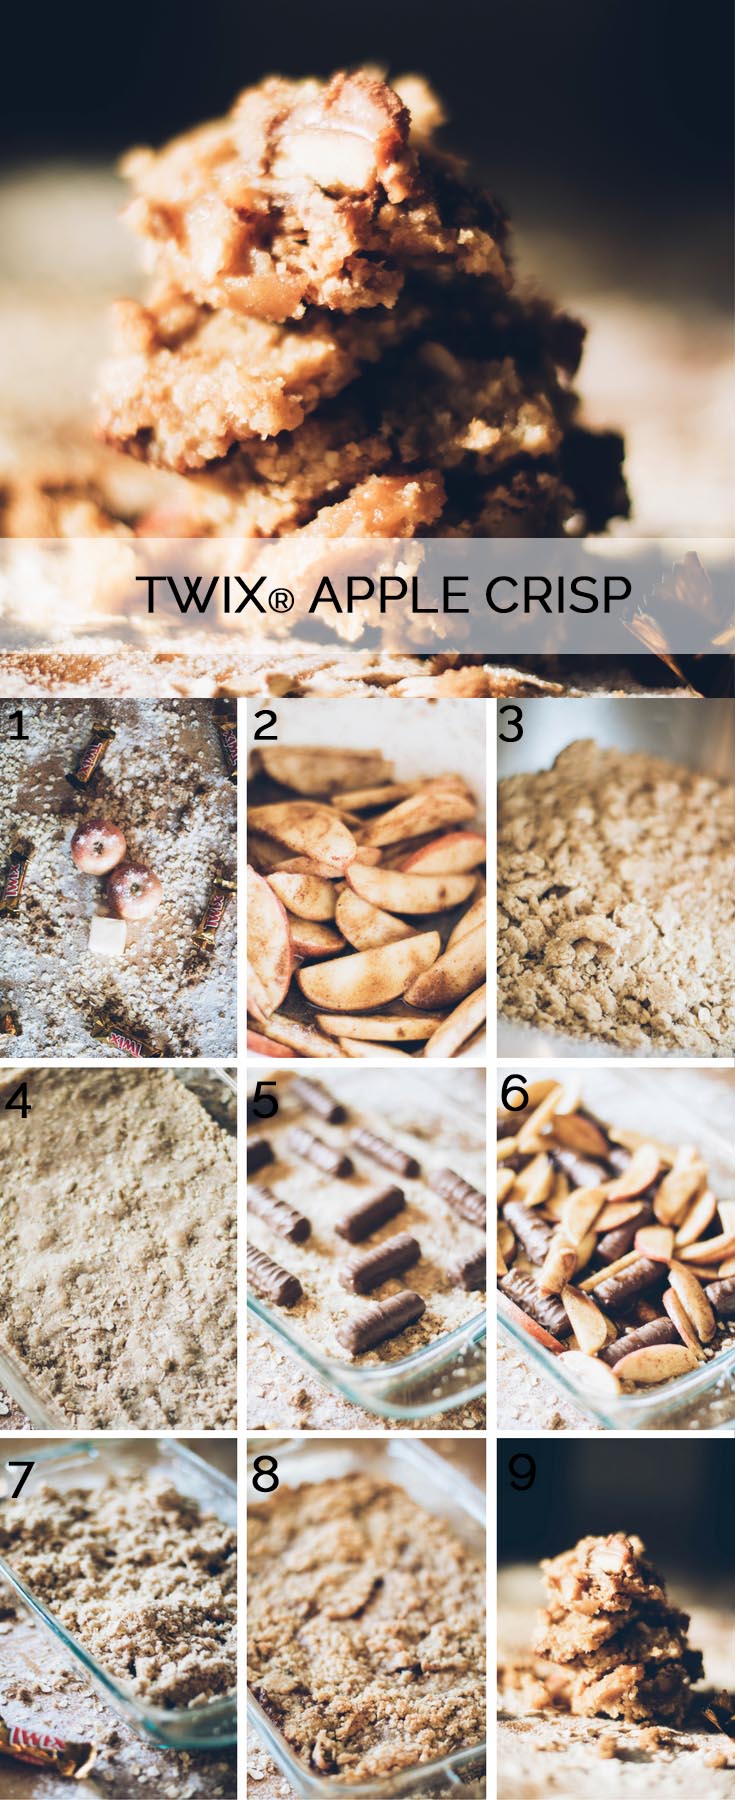 twix-apple-crisp-new